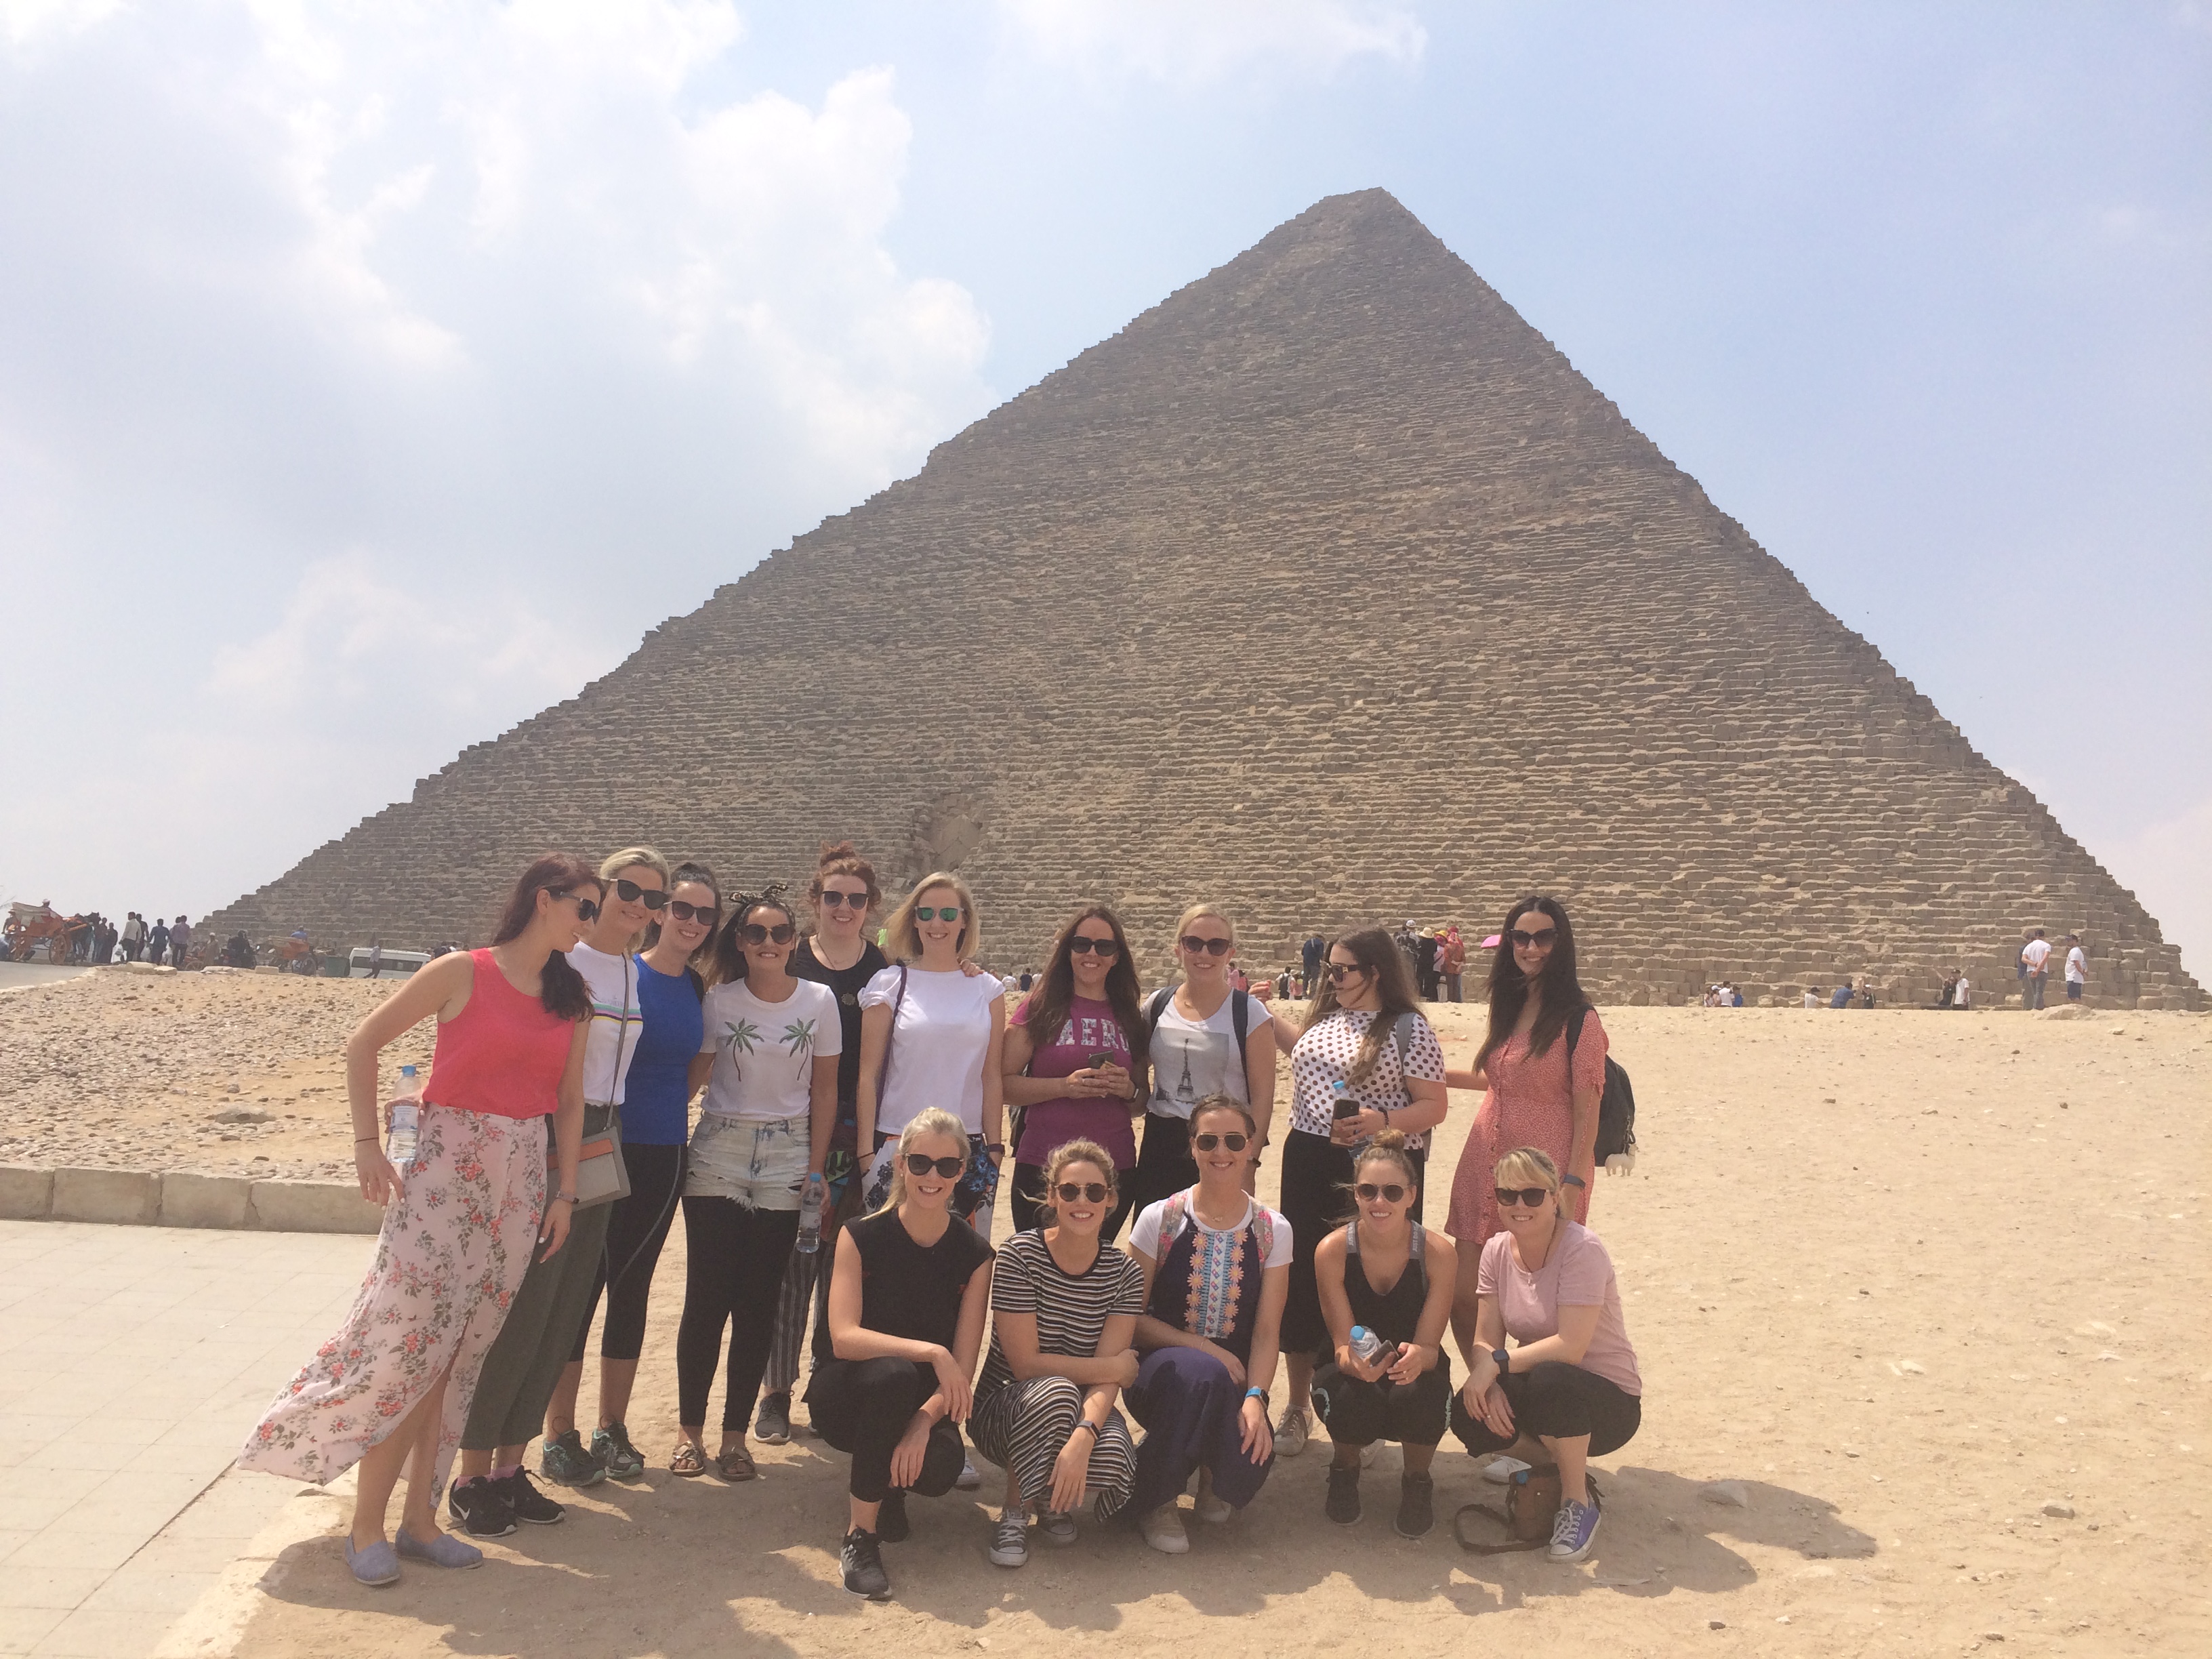 Round Trip Nile Cruise and Pyramids, Abu Simbel | Egypt Tours 2021